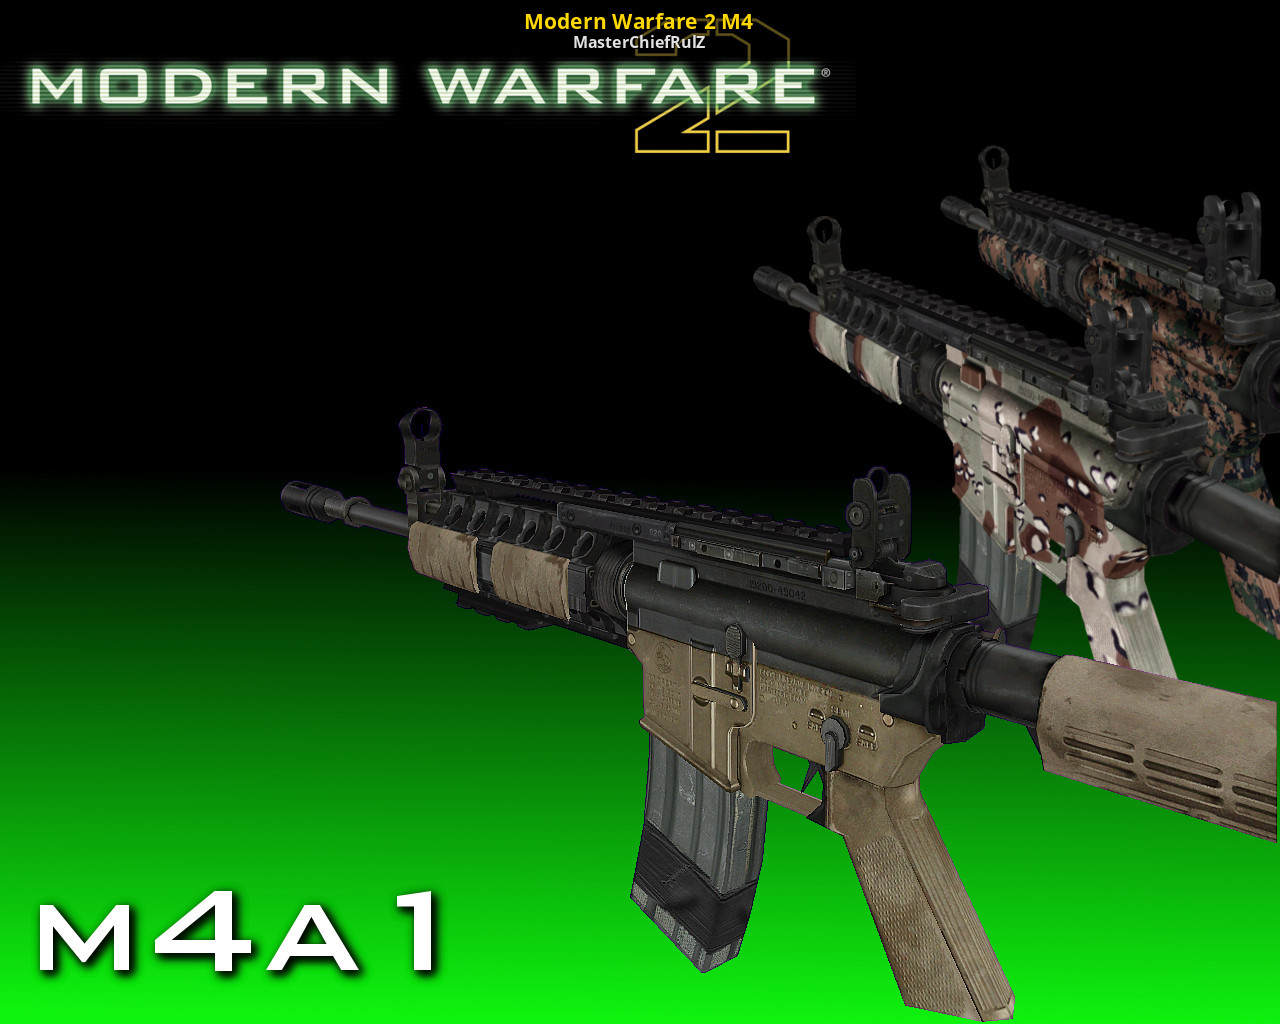 A Mod for Battlefield 2. Modern Warfare 2 M4. 